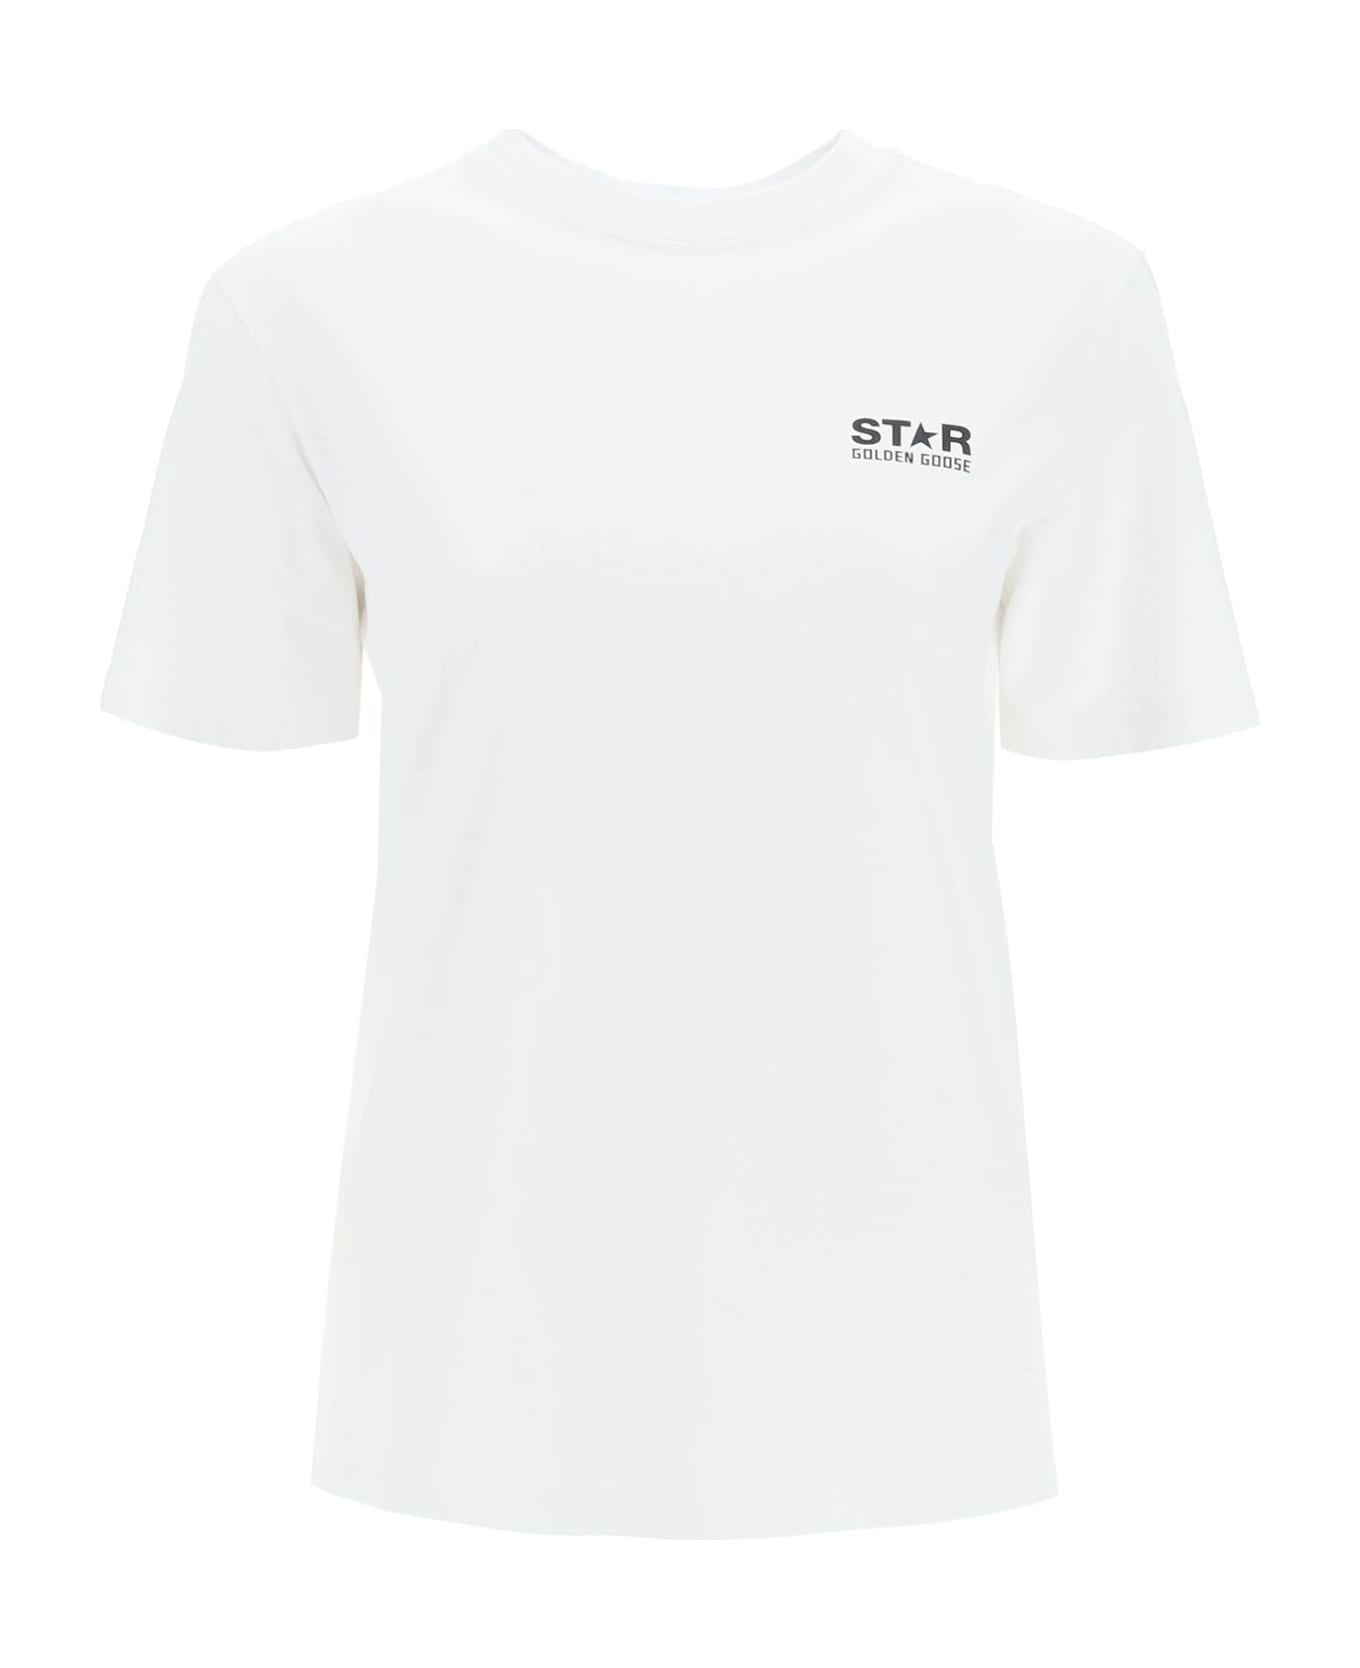 Golden Goose Big Star T-shirt - WHITE BLACK (White)